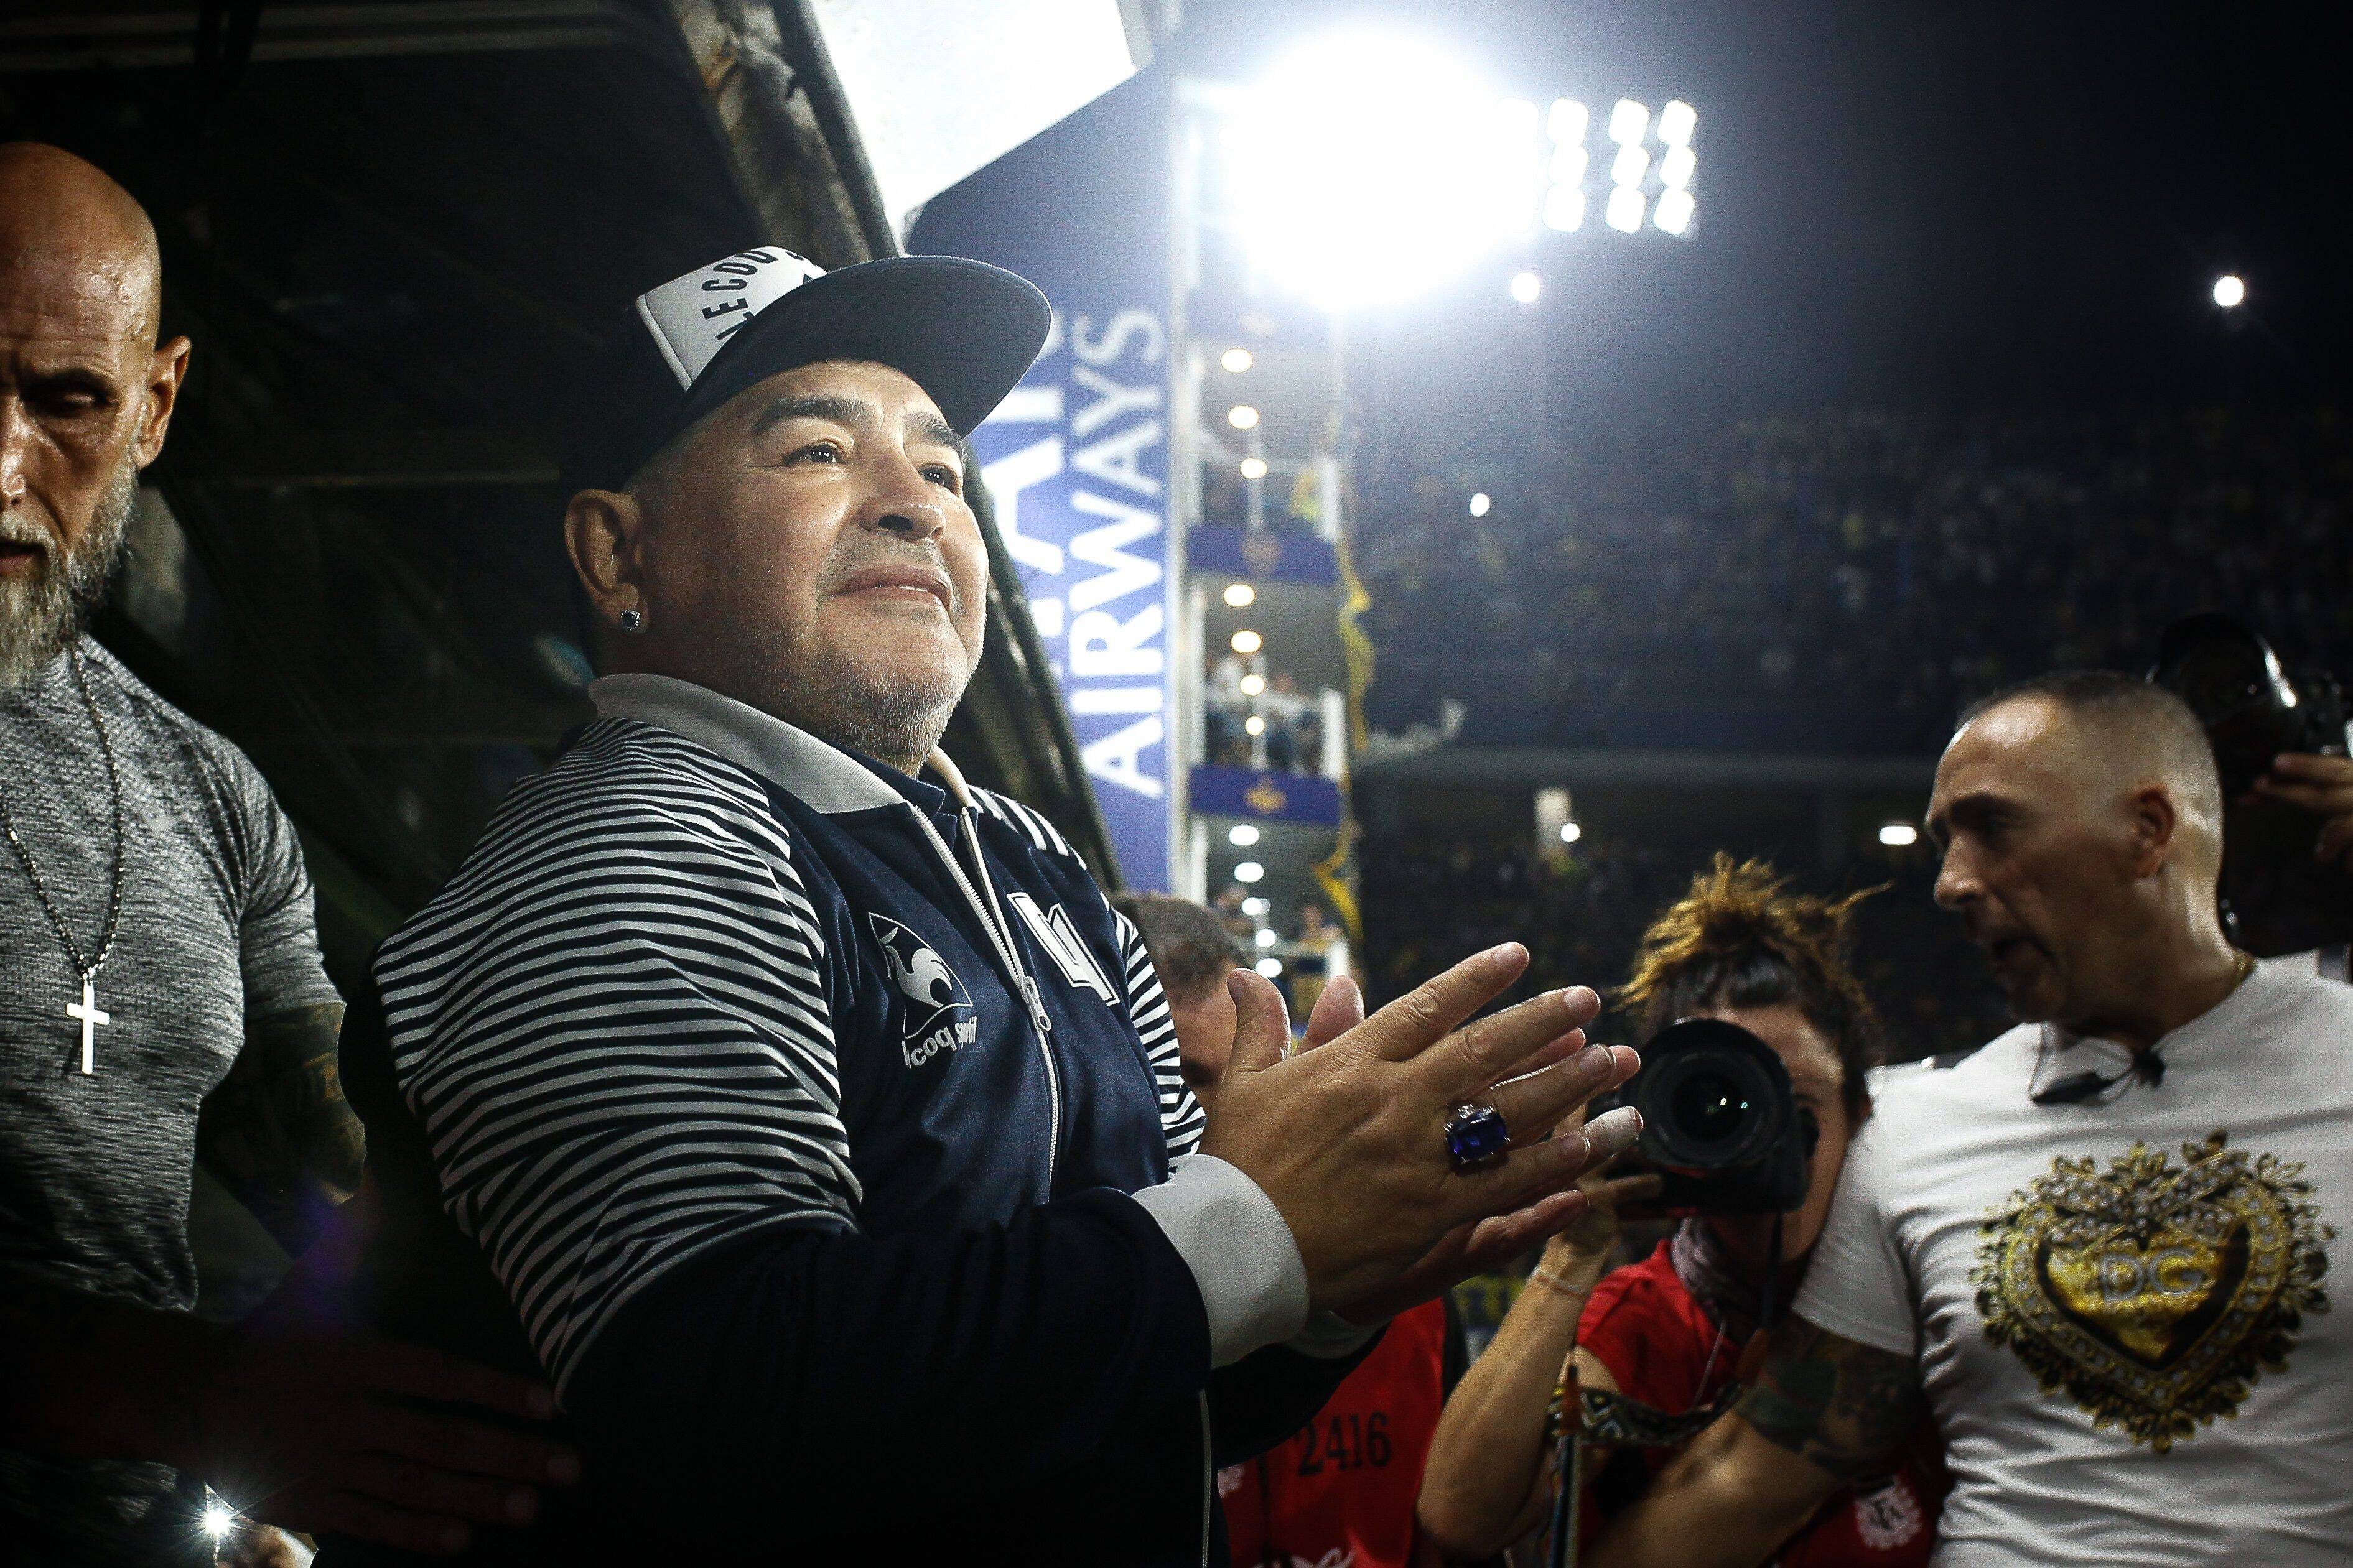 Gimnasia S Head Coach Diego Armando Maradona Arrives For A Game Of The Argentine Superliga Between Boca Juniors And Gimn